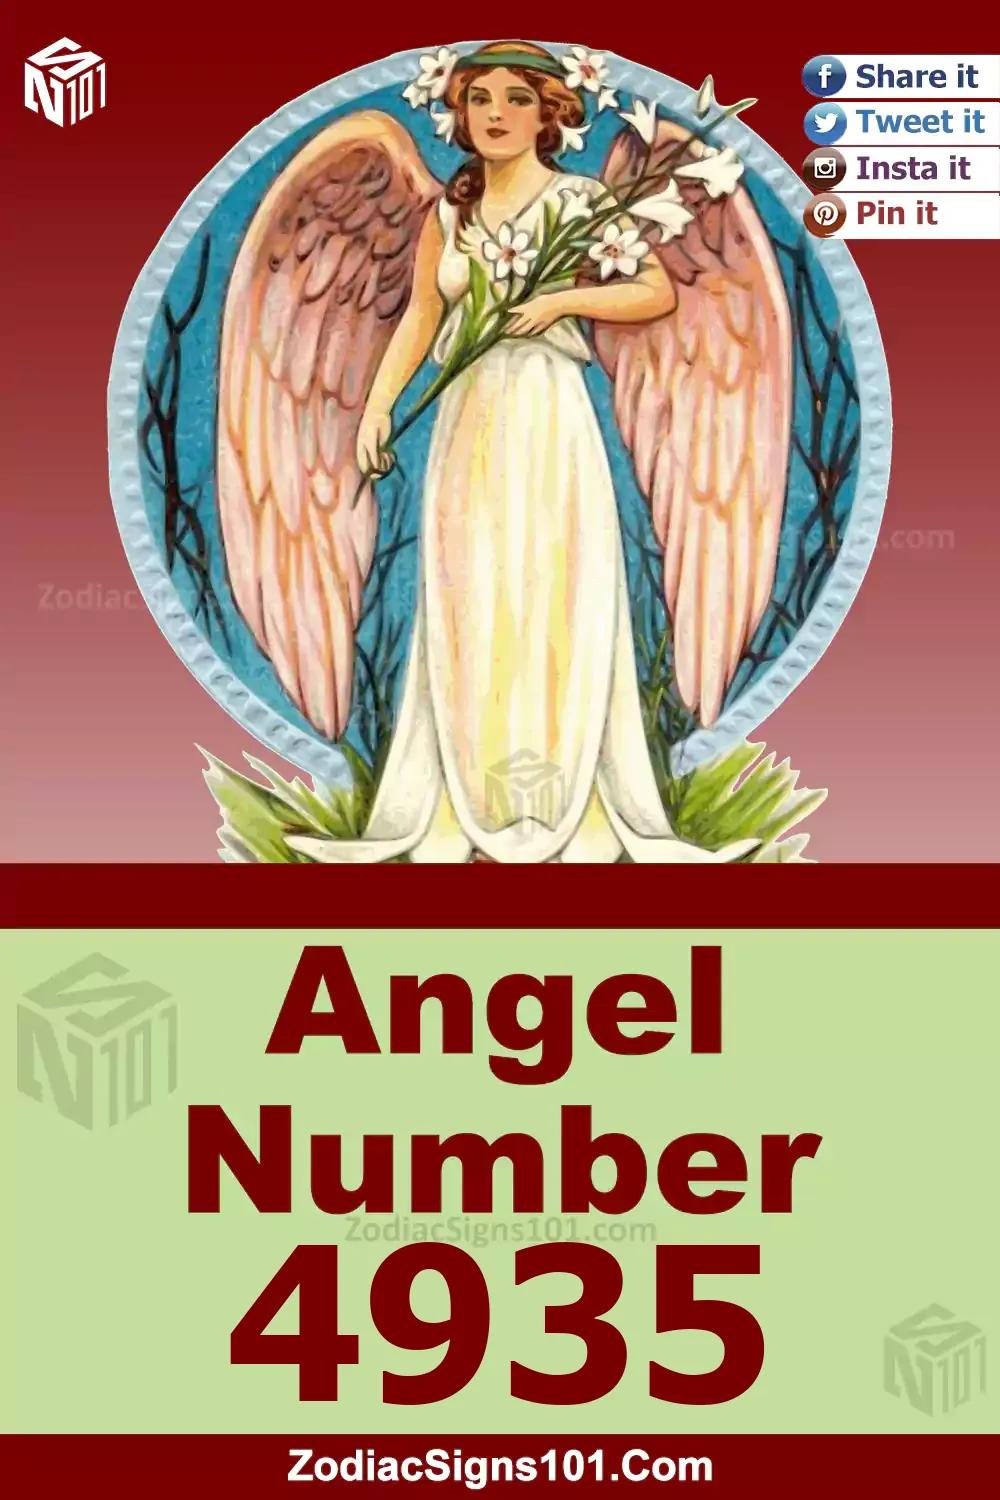 4935-Angel-Number-Meaning.jpg